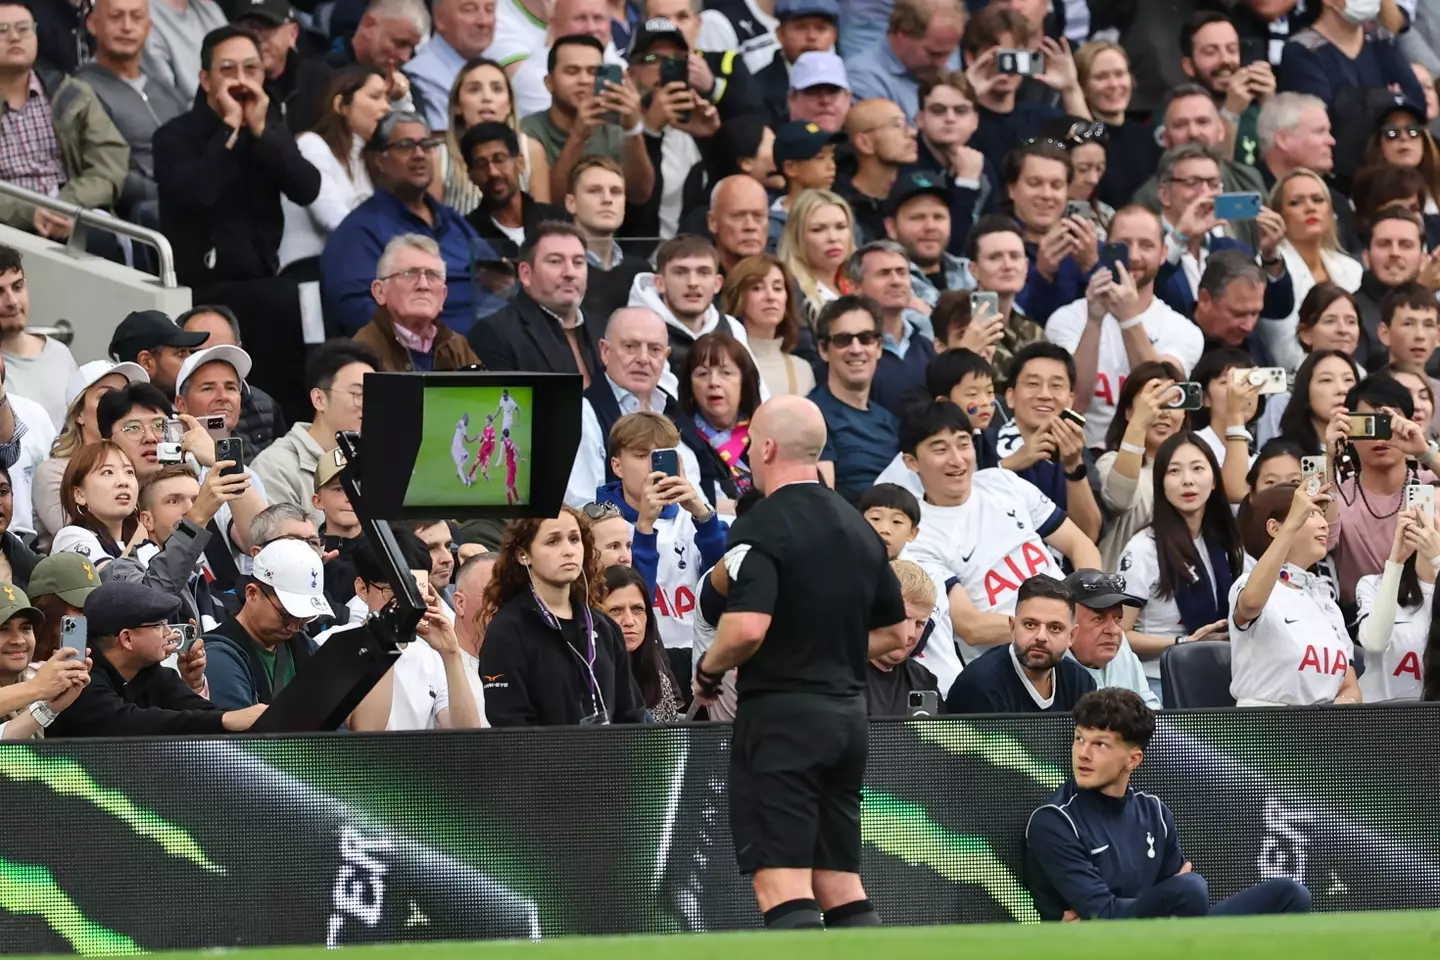 Match referee Simon Hooper checks the VAR monitor during Tottenham vs Liverpool. Image: Getty